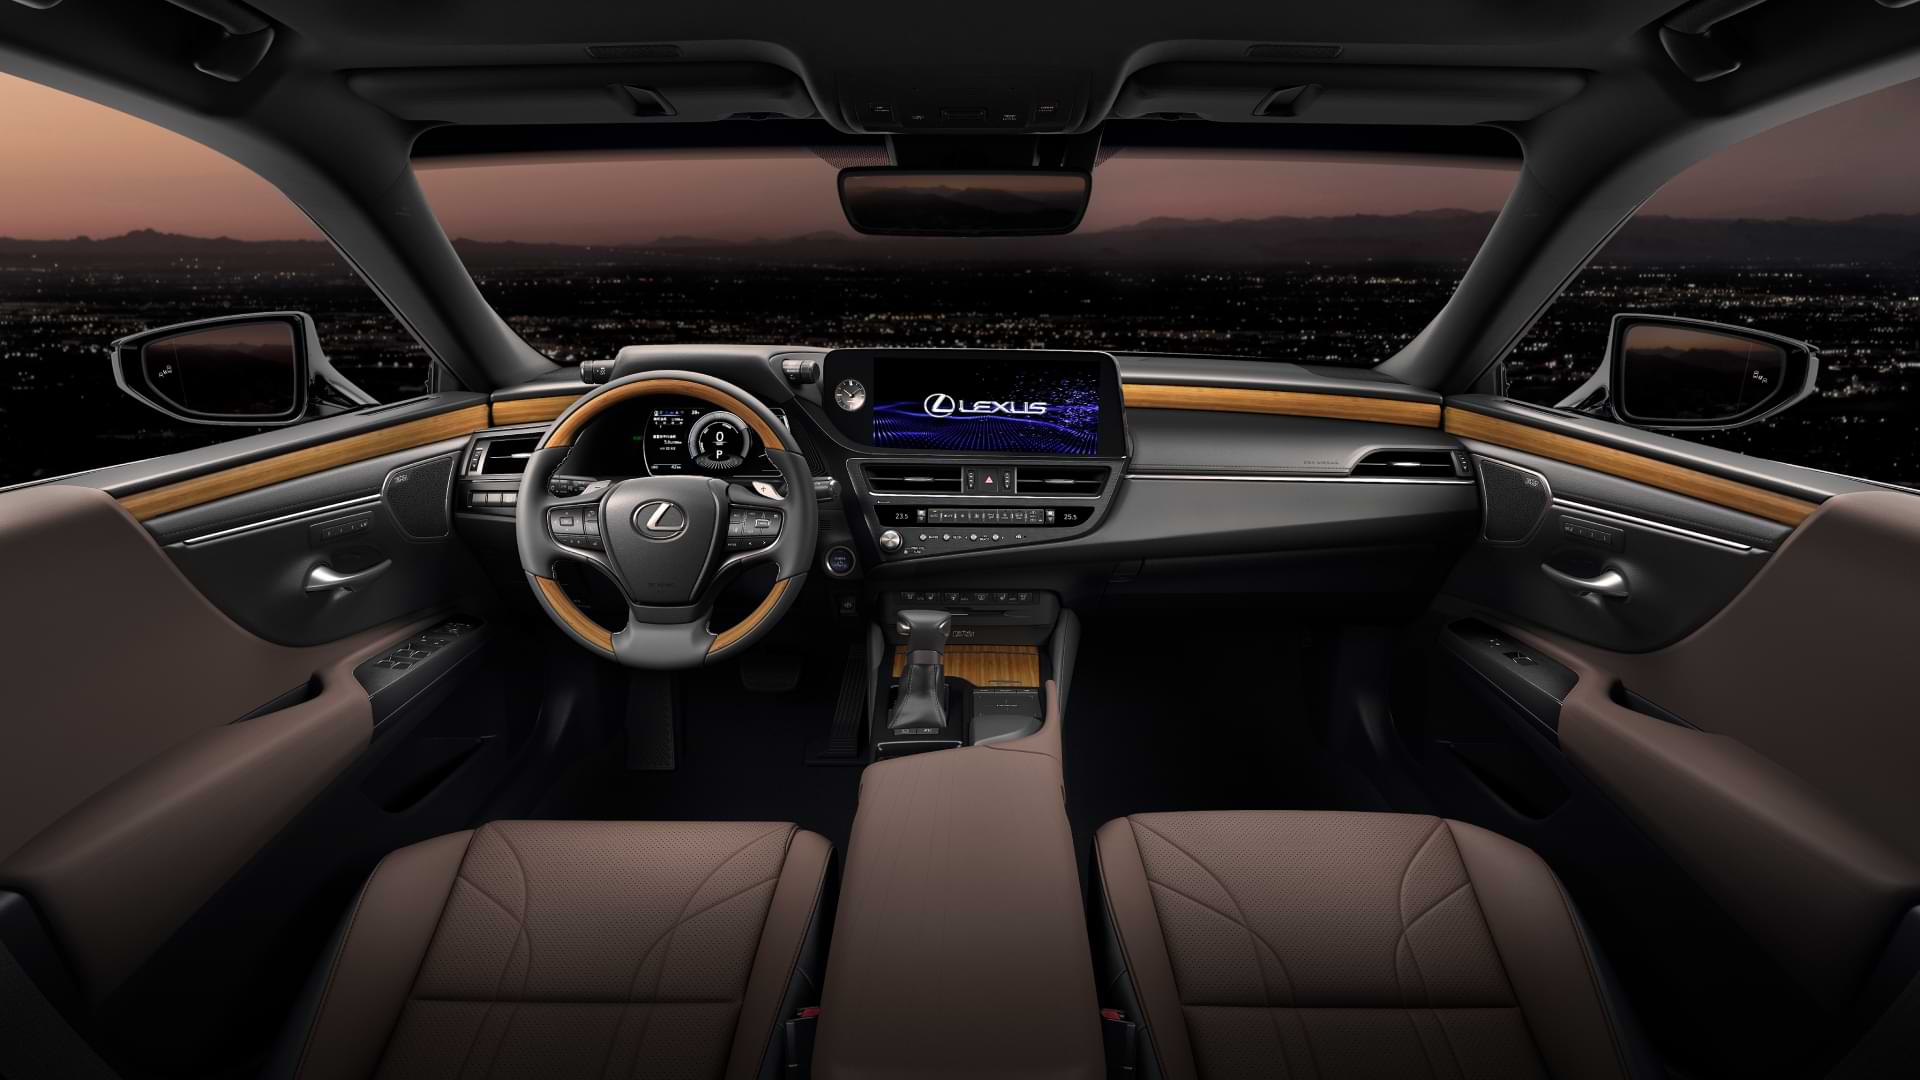 Interior view of 2021 Lexus ES steering wheel, dash and front seats. 